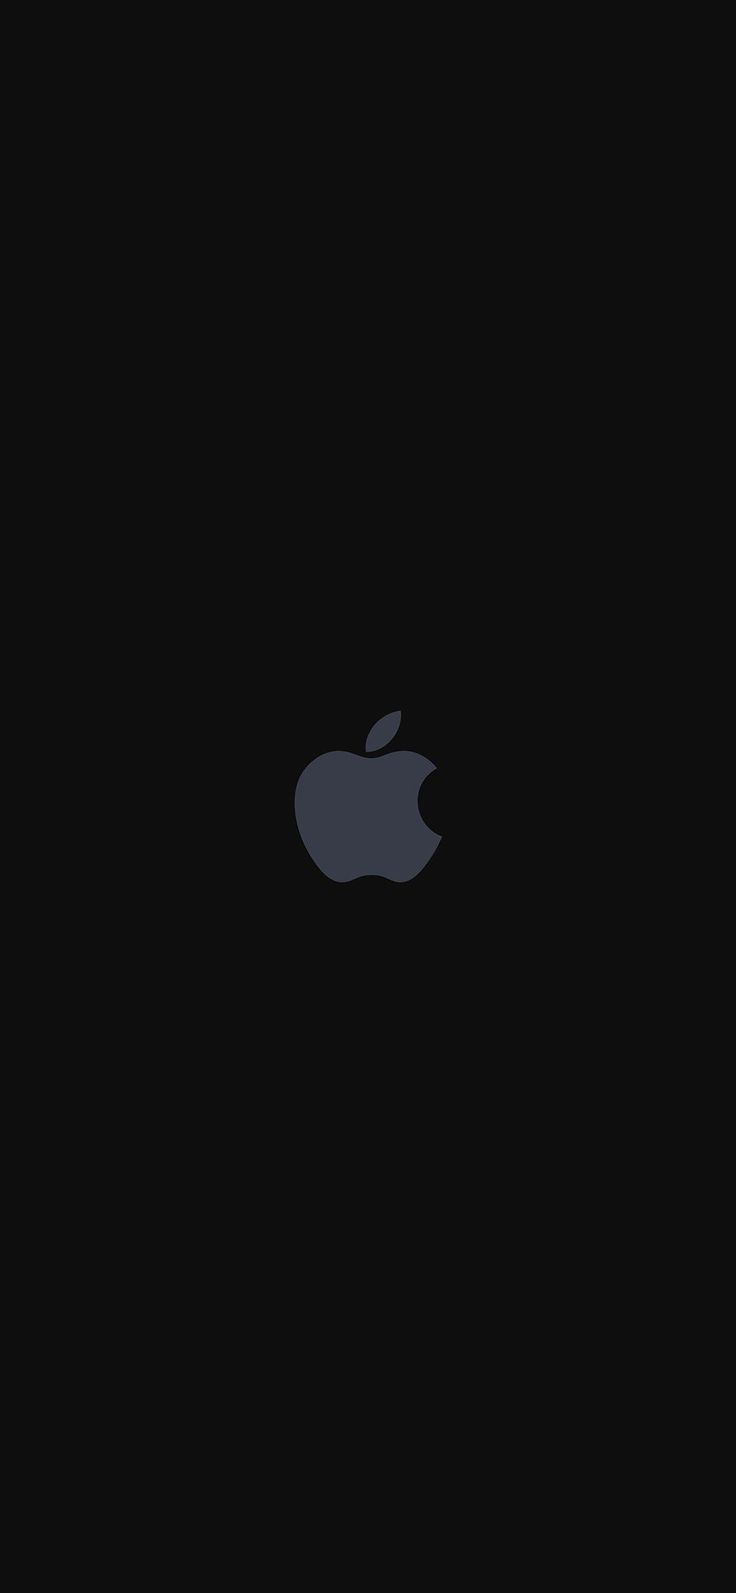 Black Apple Wallpaper For iPhone. Apple wallpaper, Apple logo wallpaper, iPhone wallpaper